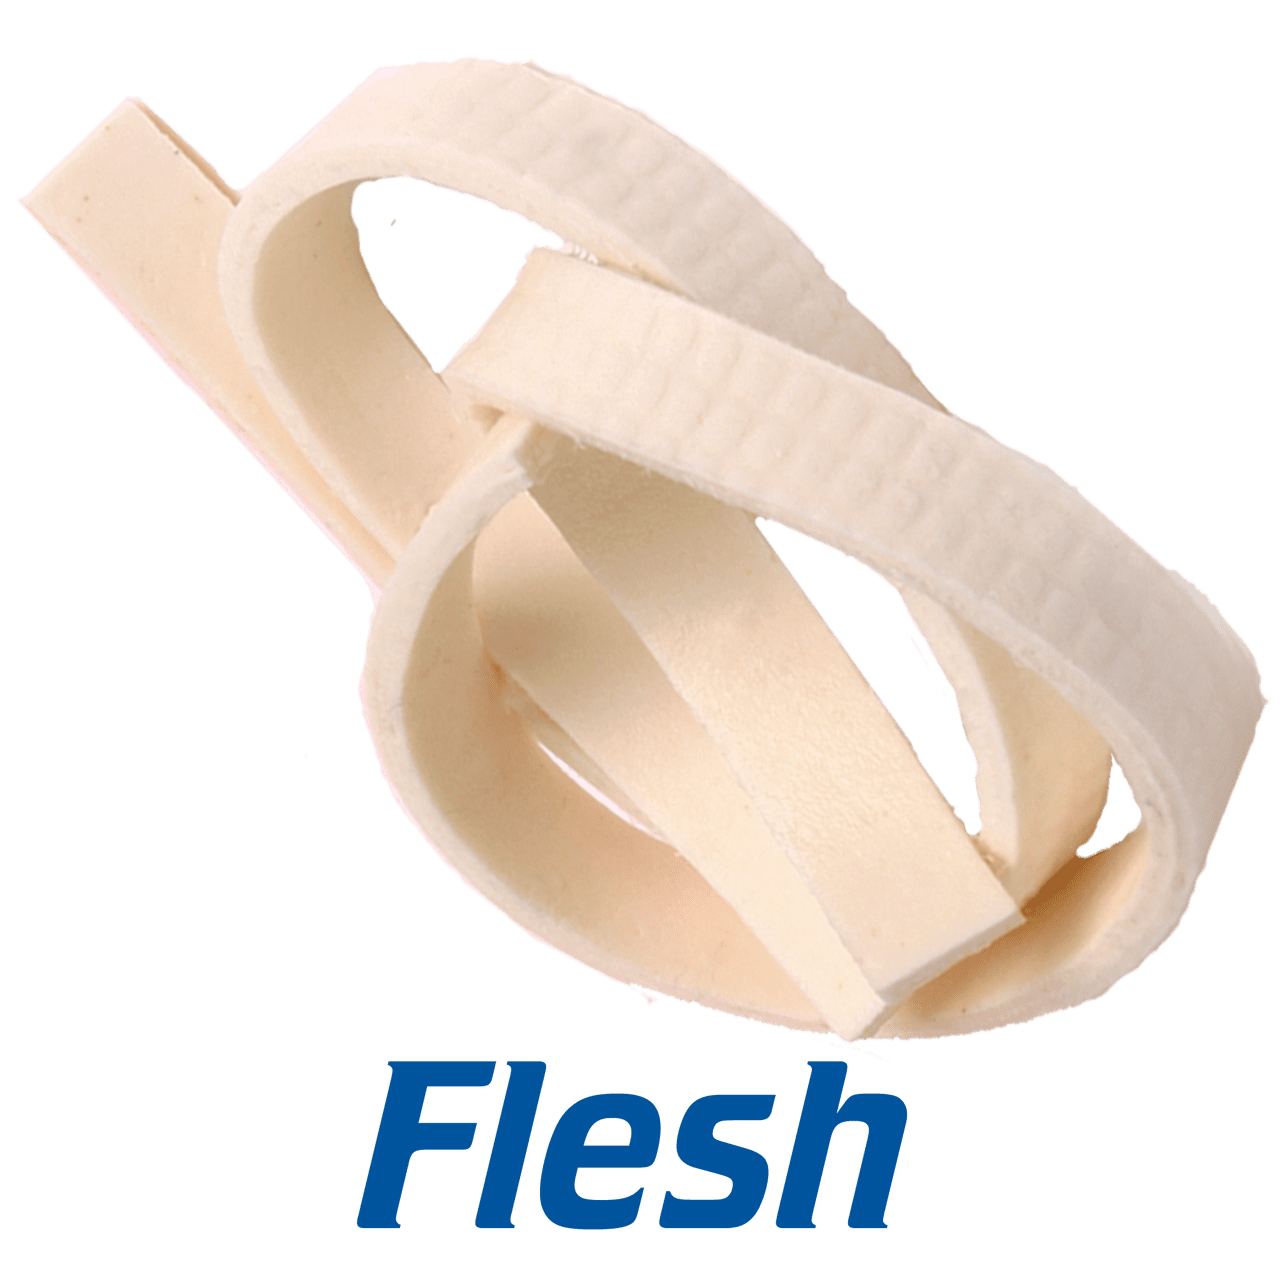 Fishbites E-Z Squid - Flesh - Long Lasting